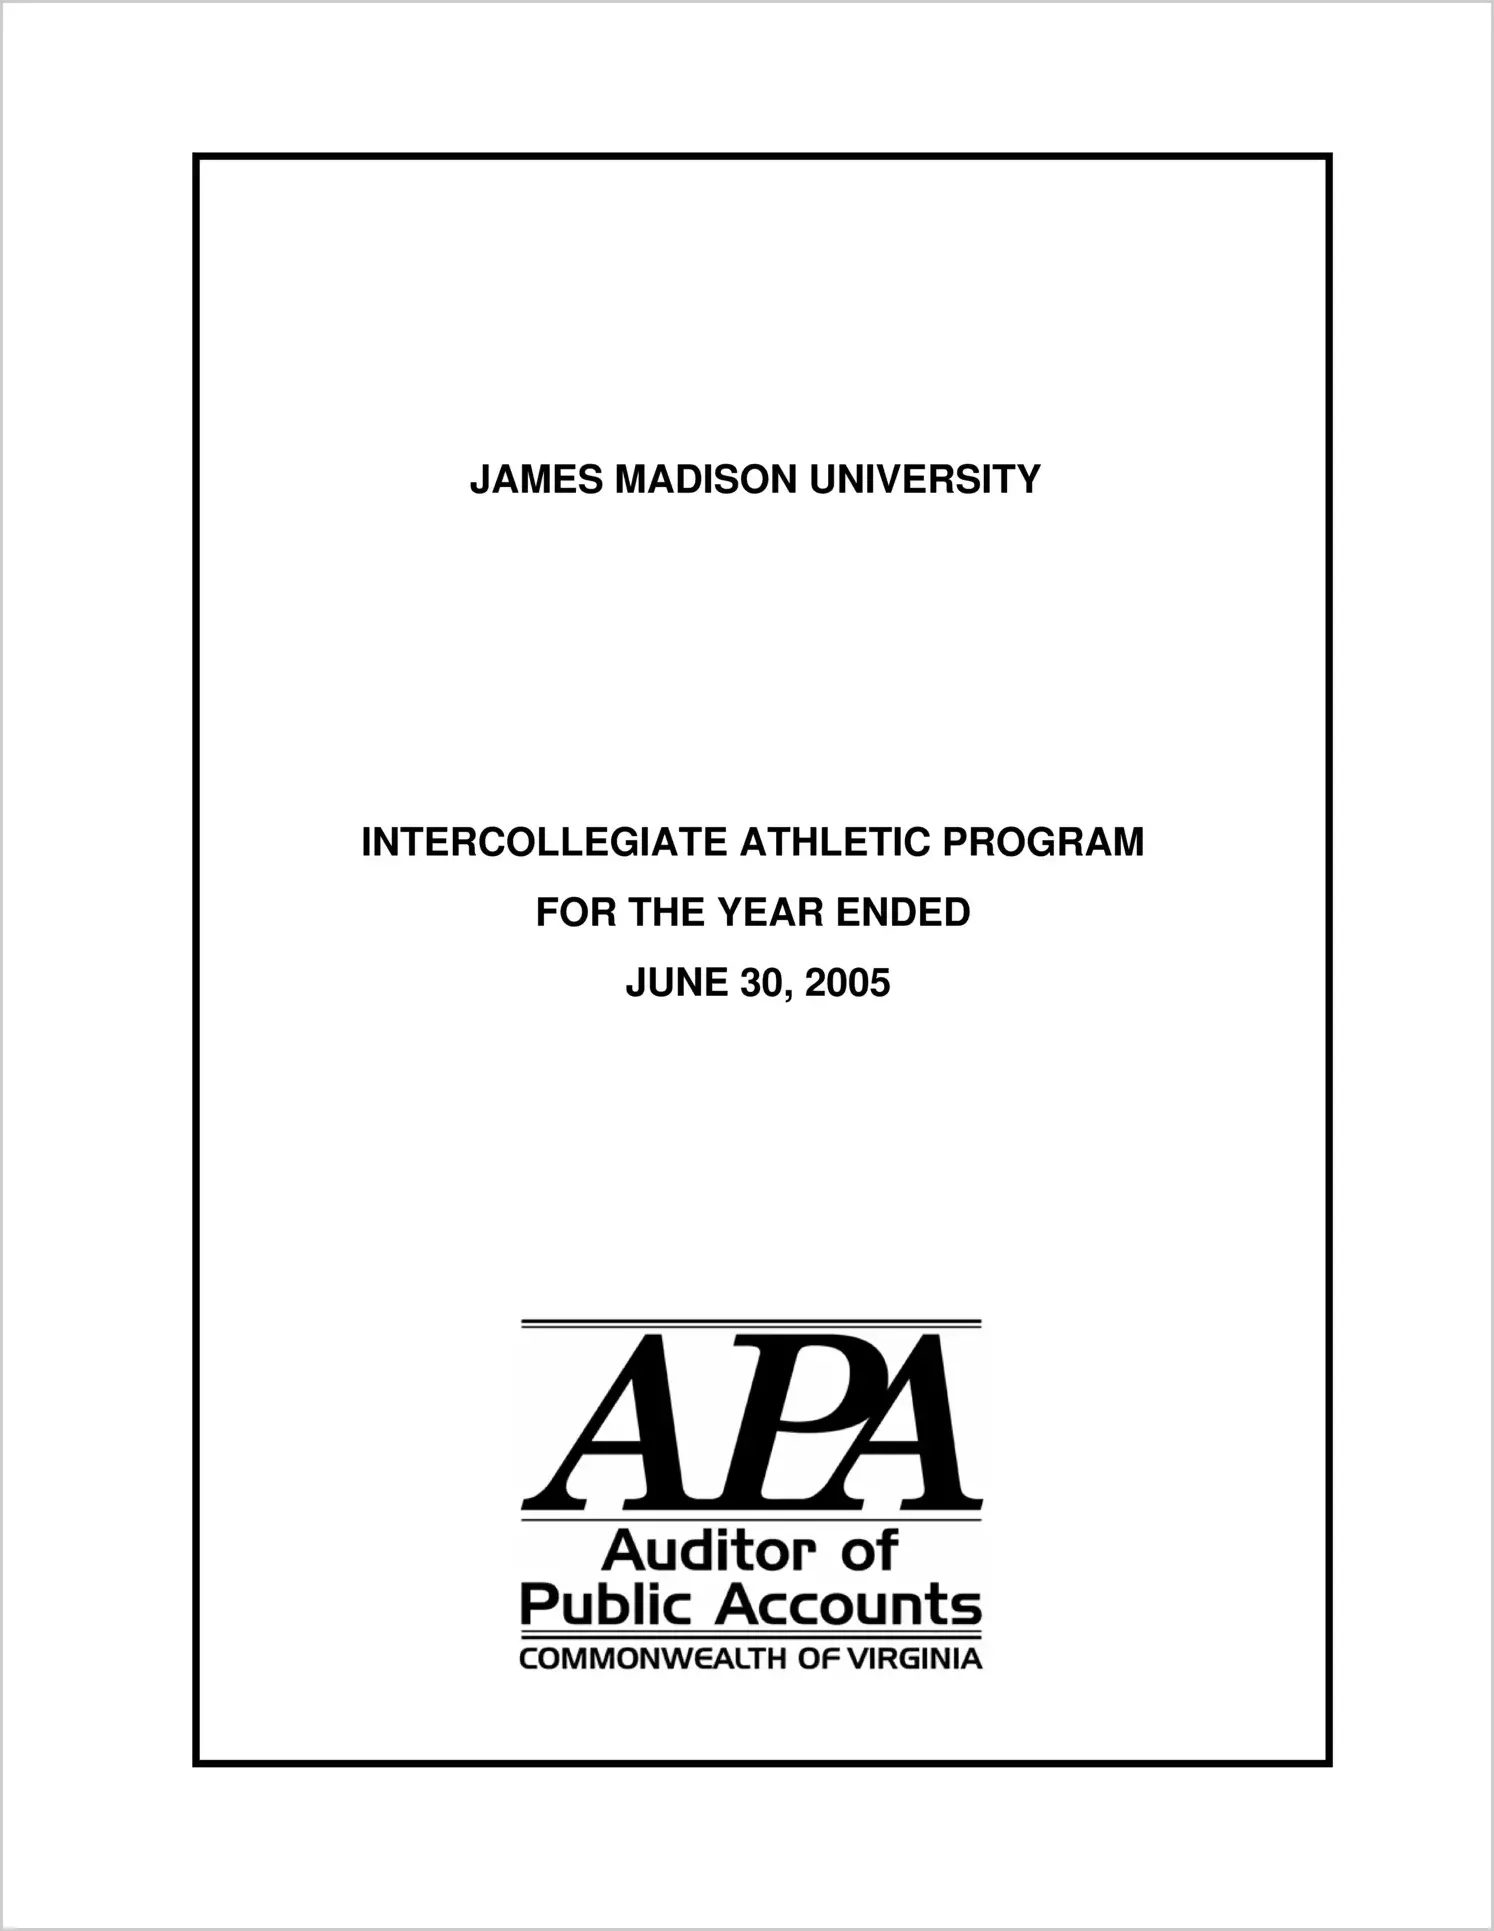 James Madison University Intercollegiate Athletic Programs for the year ended June 30, 2005